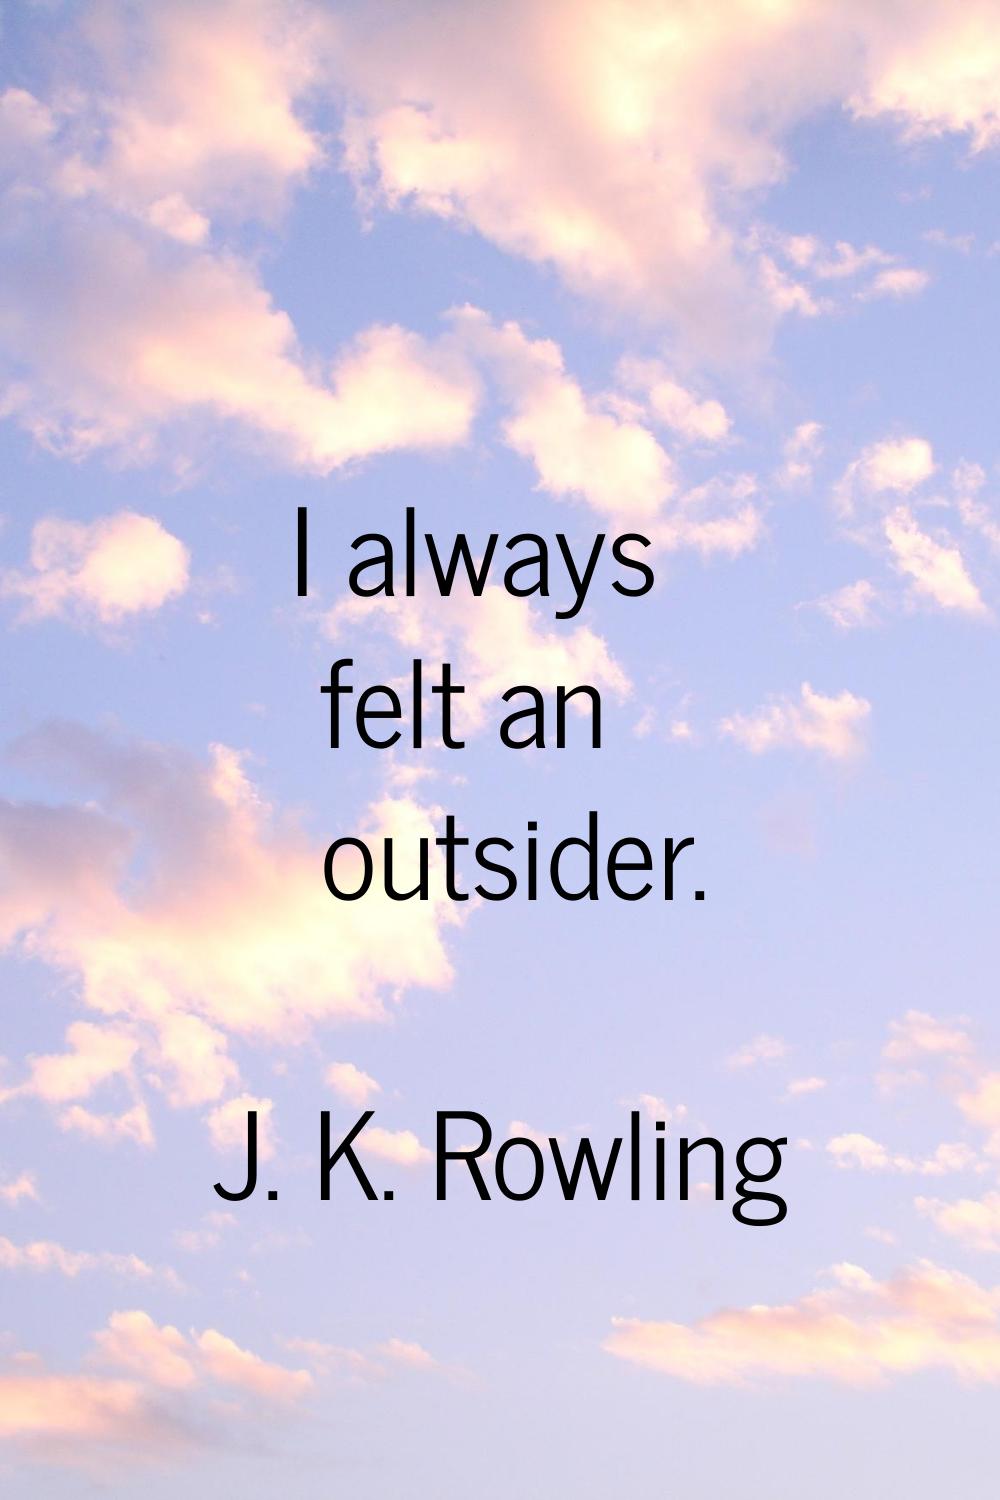 I always felt an outsider.